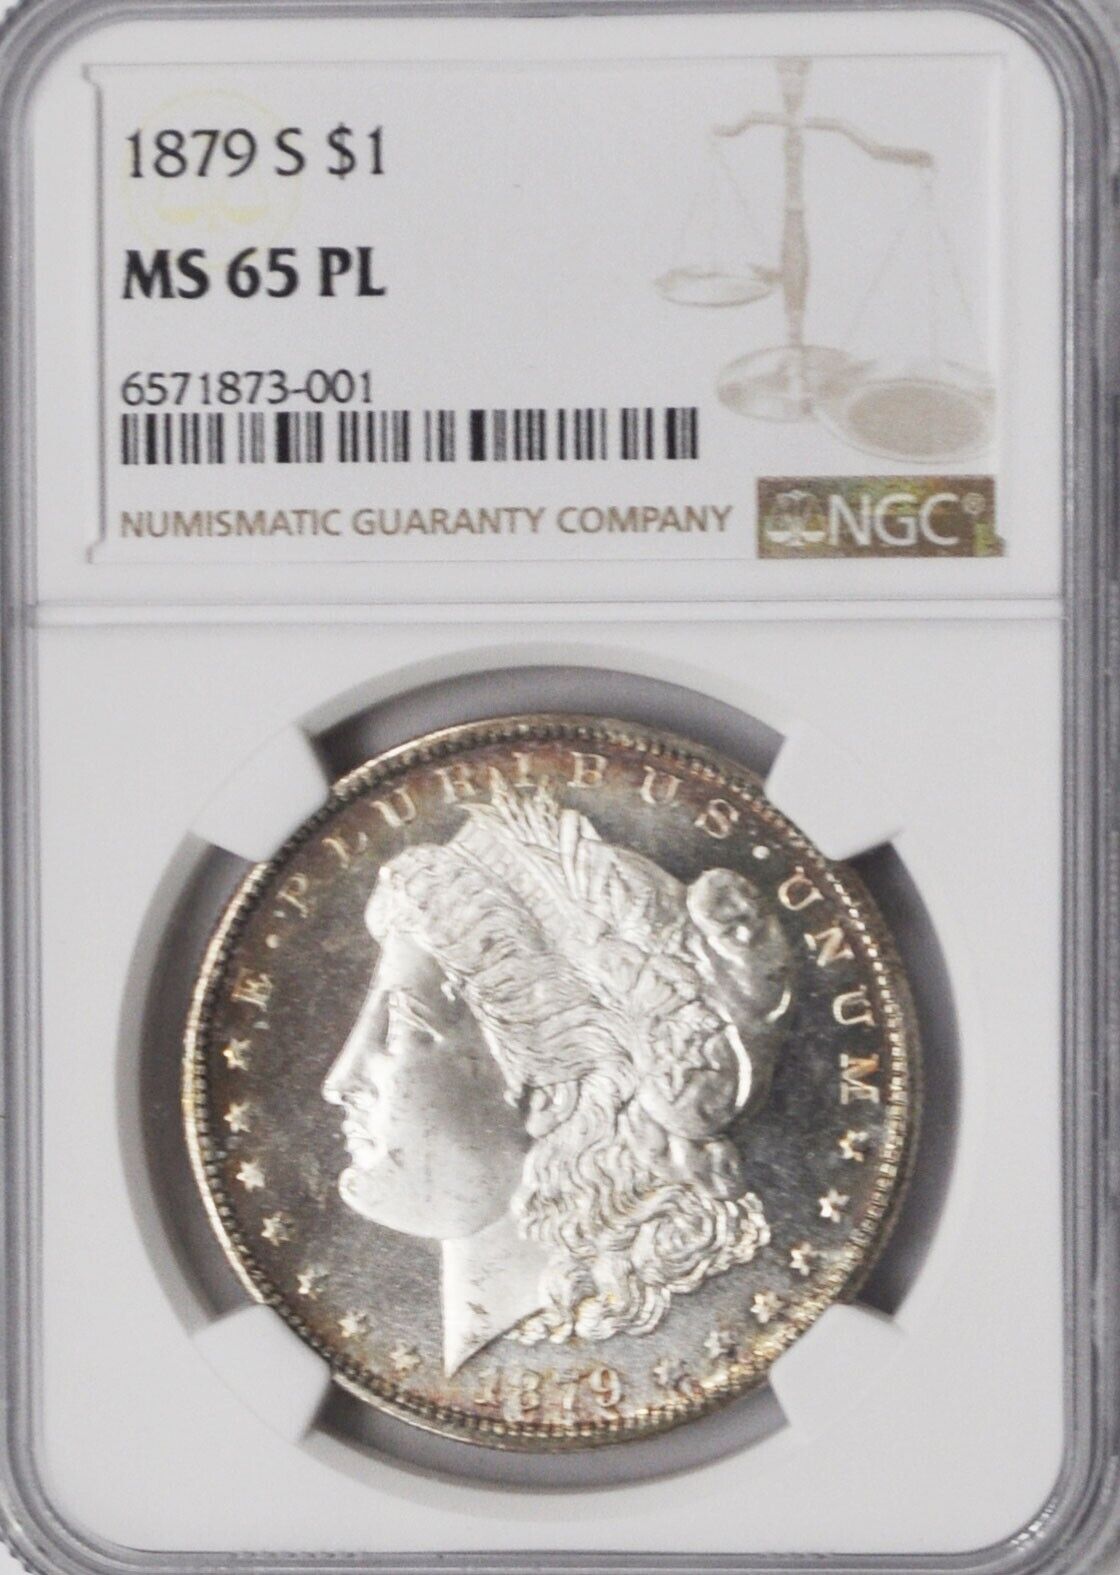 1879 S $1 Morgan Silver Dollar NGC MS65 PL Rare Proof Like